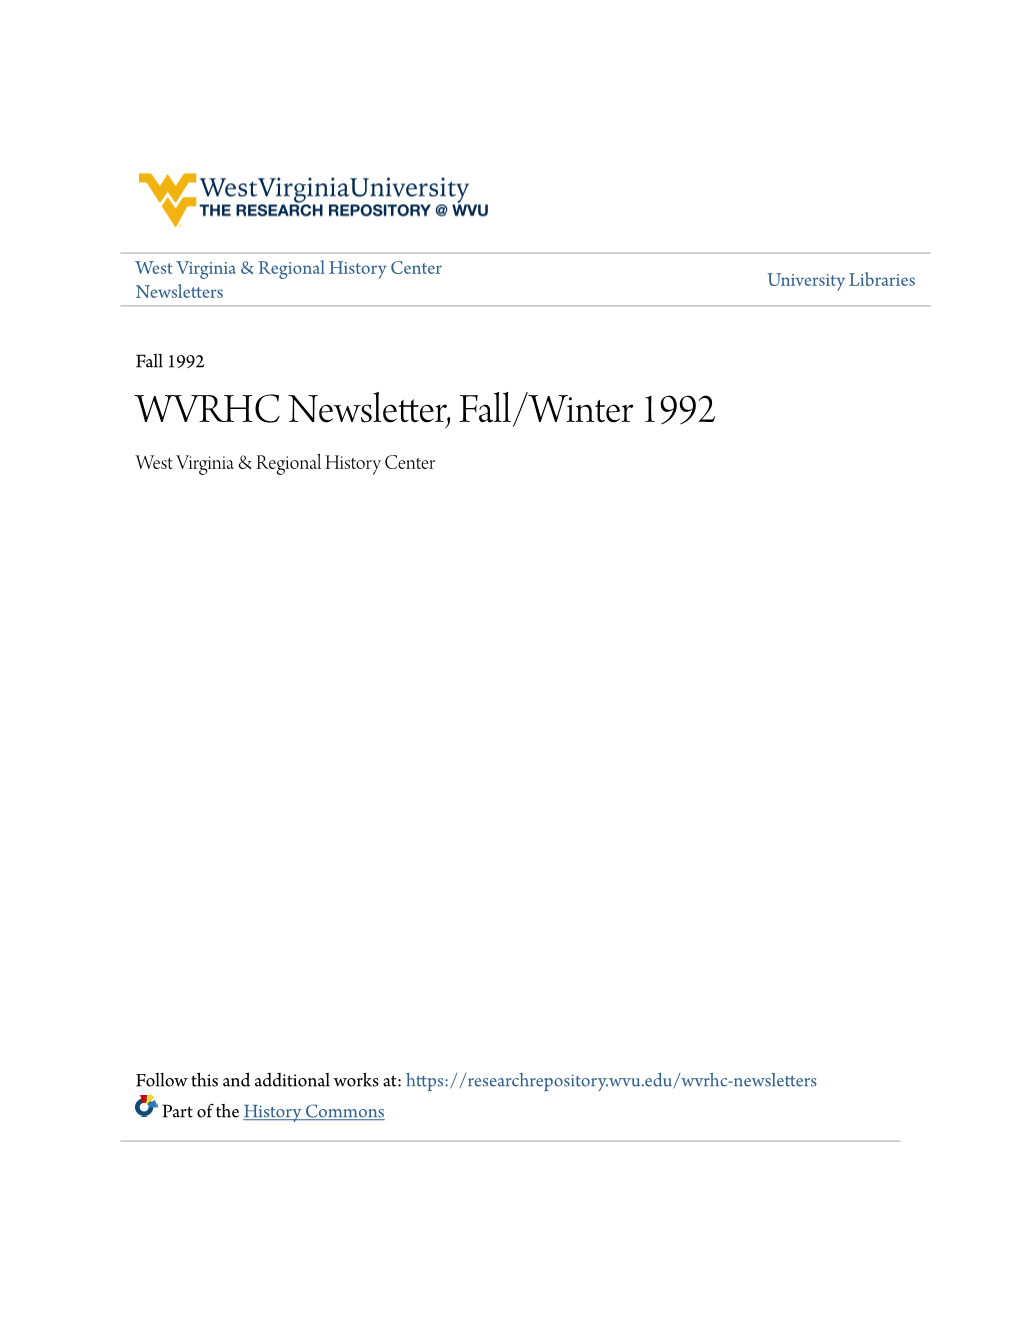 WVRHC Newsletter, Fall/Winter 1992 West Virginia & Regional History Center